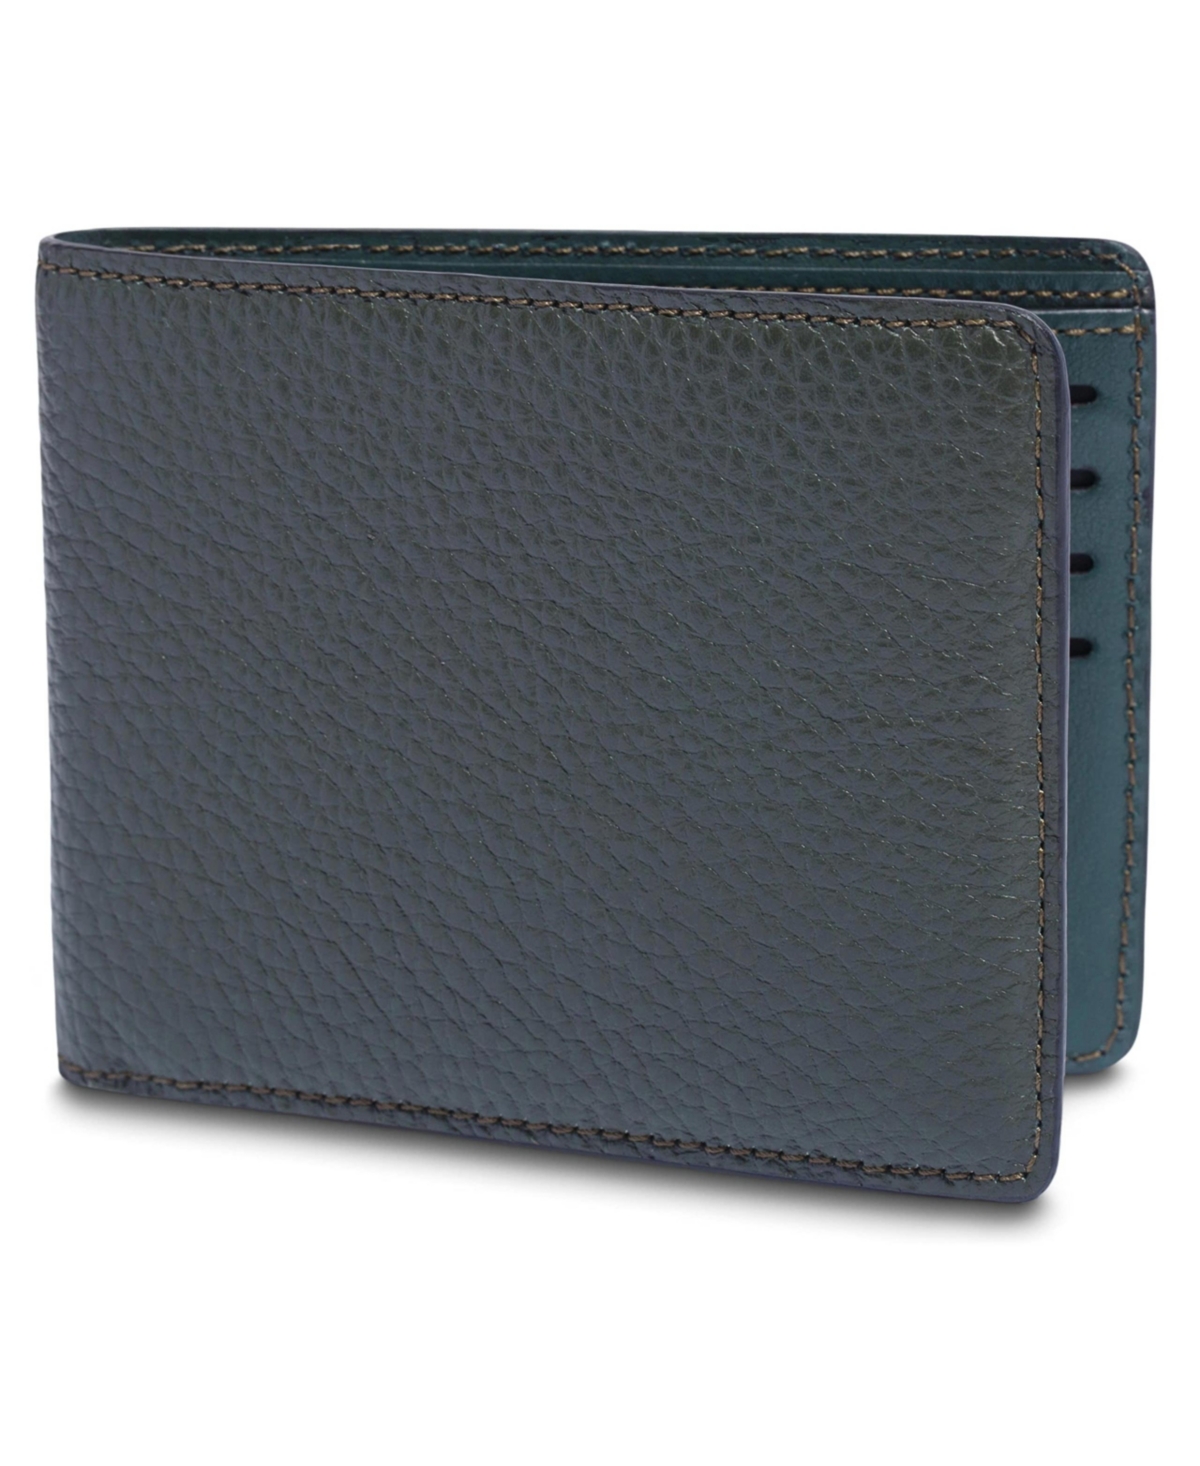 Italia Slim 8-Slot Men's Pocket Wallet Made In Italy, Monfrini Collection - Dark green